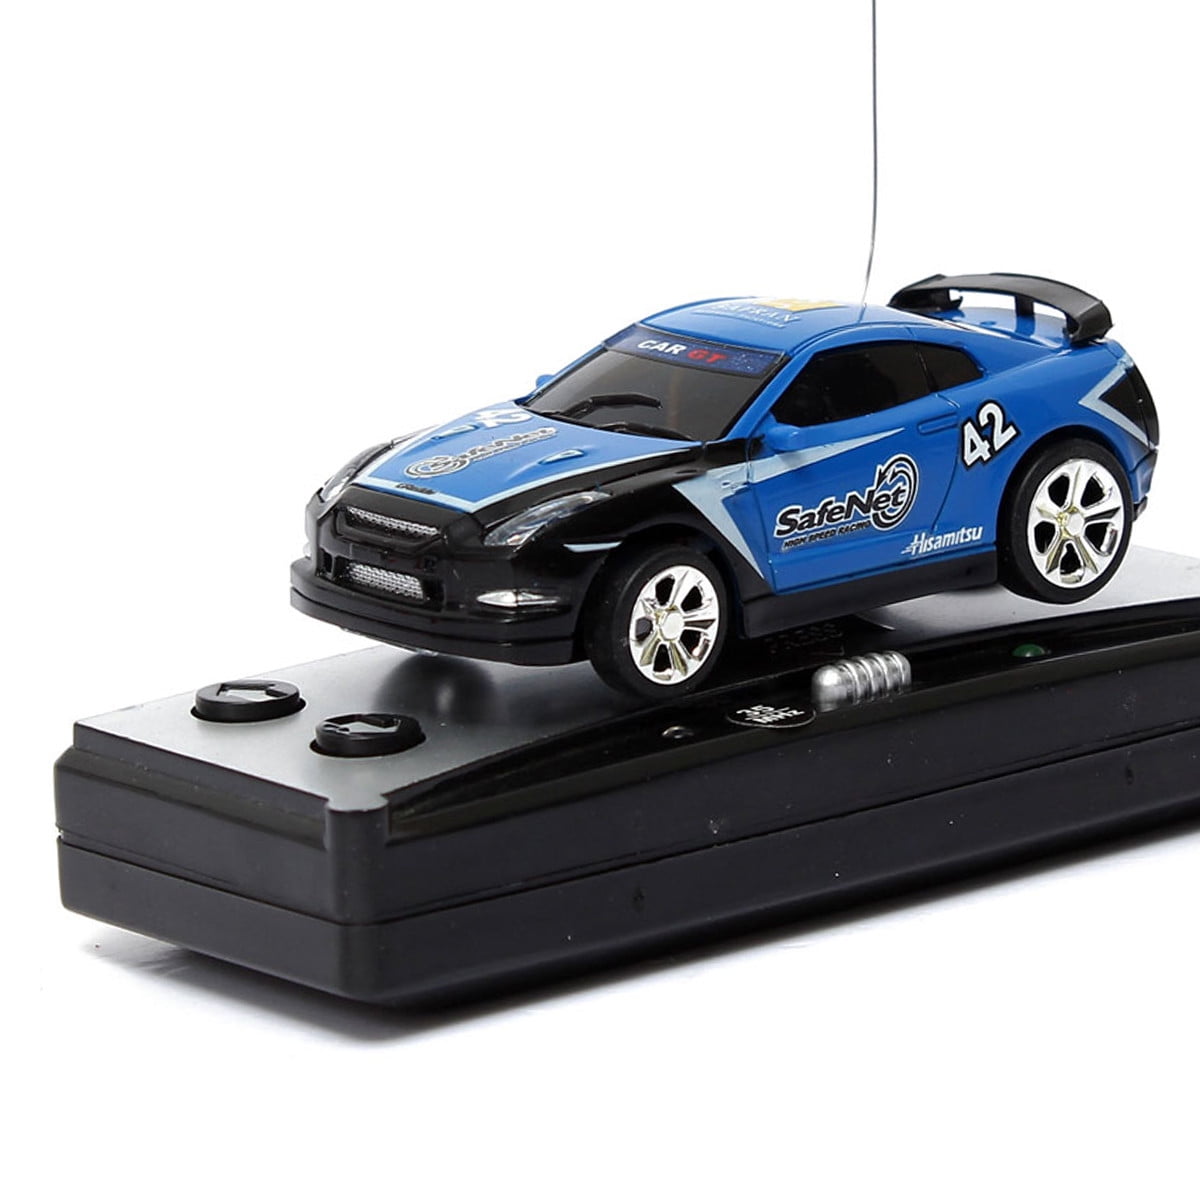 Mini Electric Coke Can RC Radio Remote Control Micro Racing Car Kids Toy Gifts 